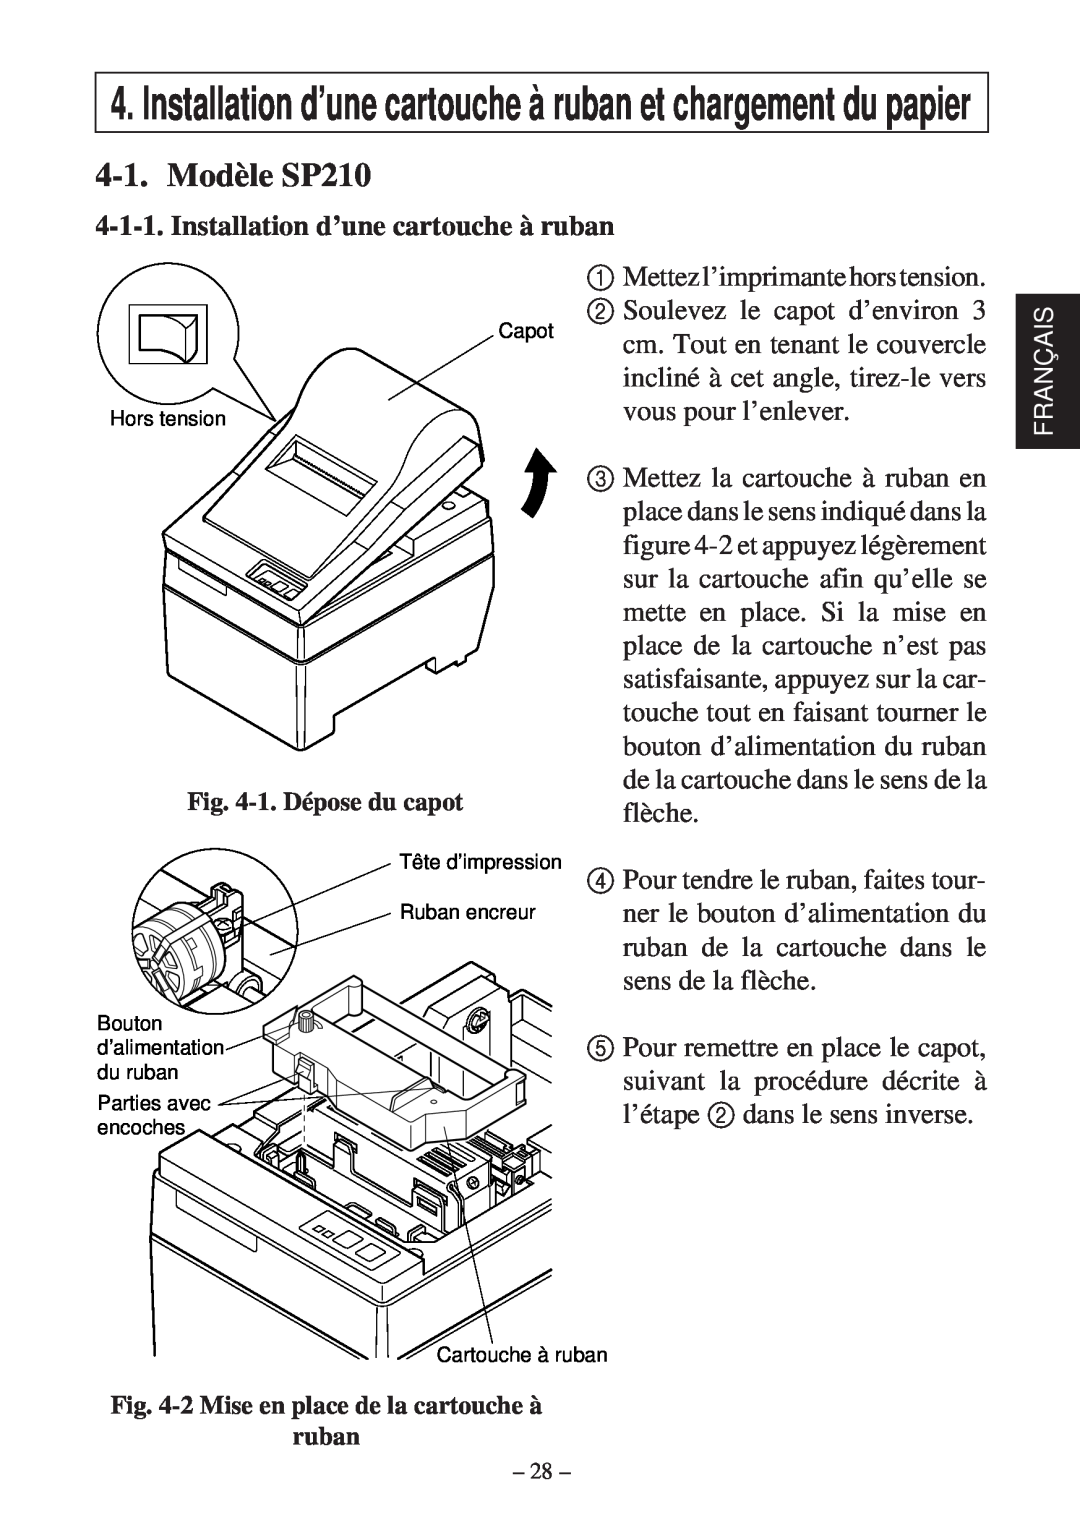 Star Micronics SP200F user manual Modèle SP210, Installation d’une cartouche à ruban 